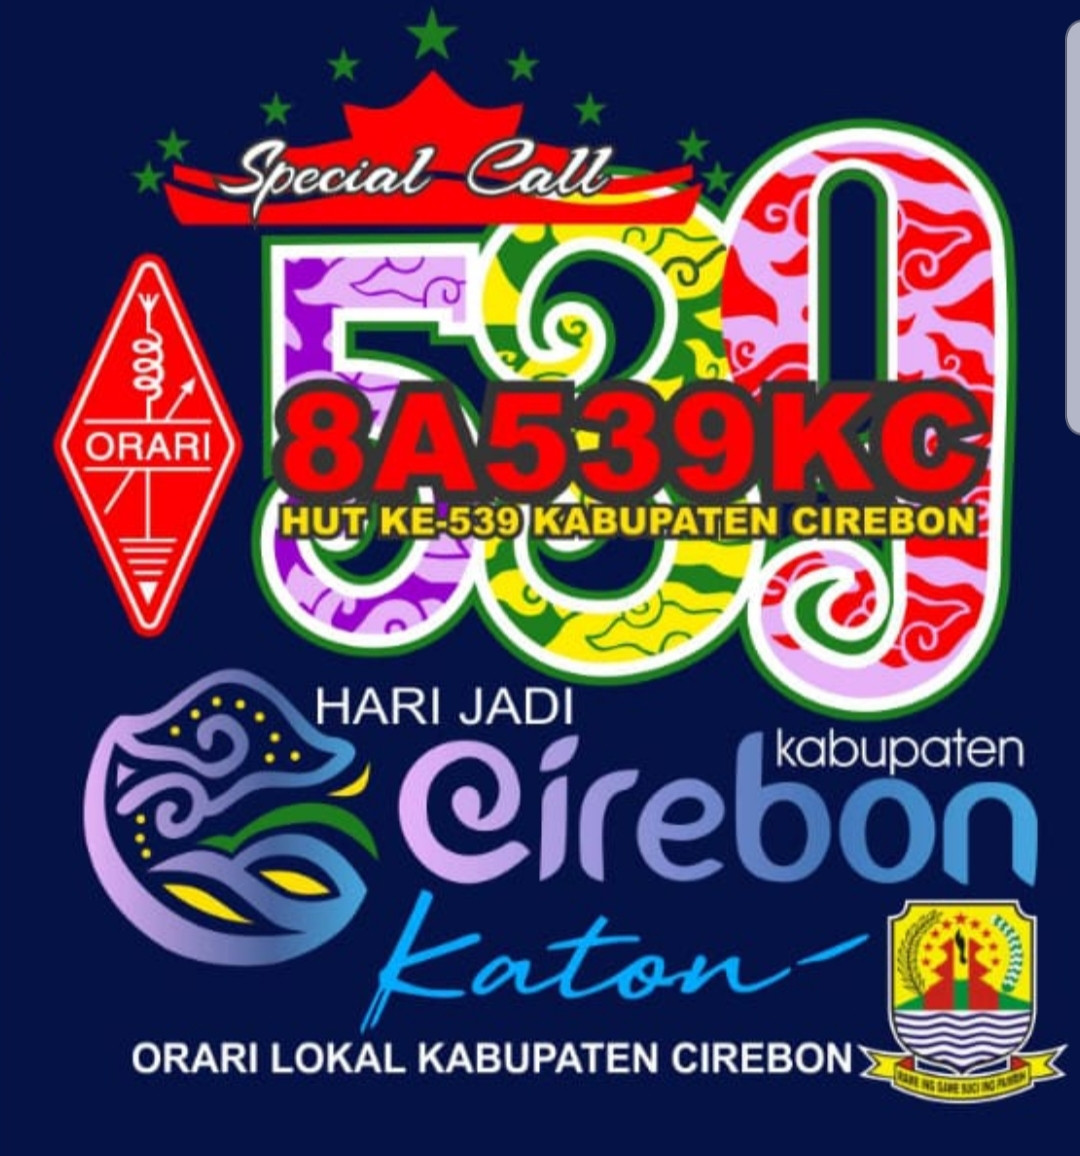 8A539KC Kabupaten Cirebon, Indonesia DX News